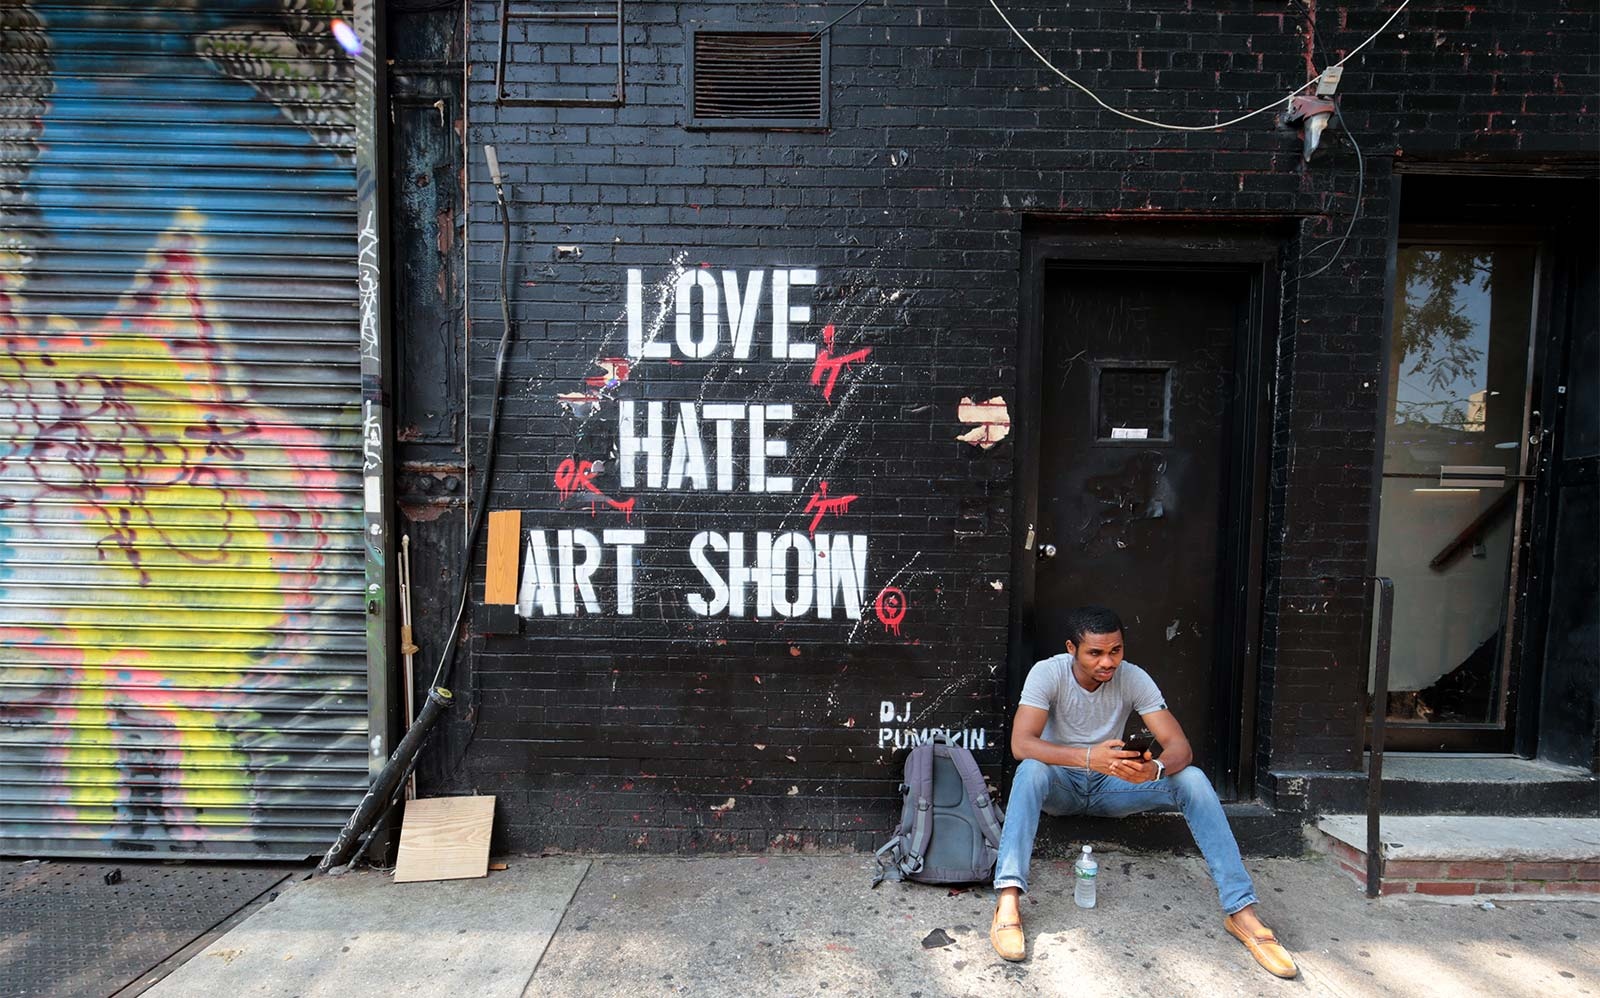 Image from Graffiti Art - East Village - New York